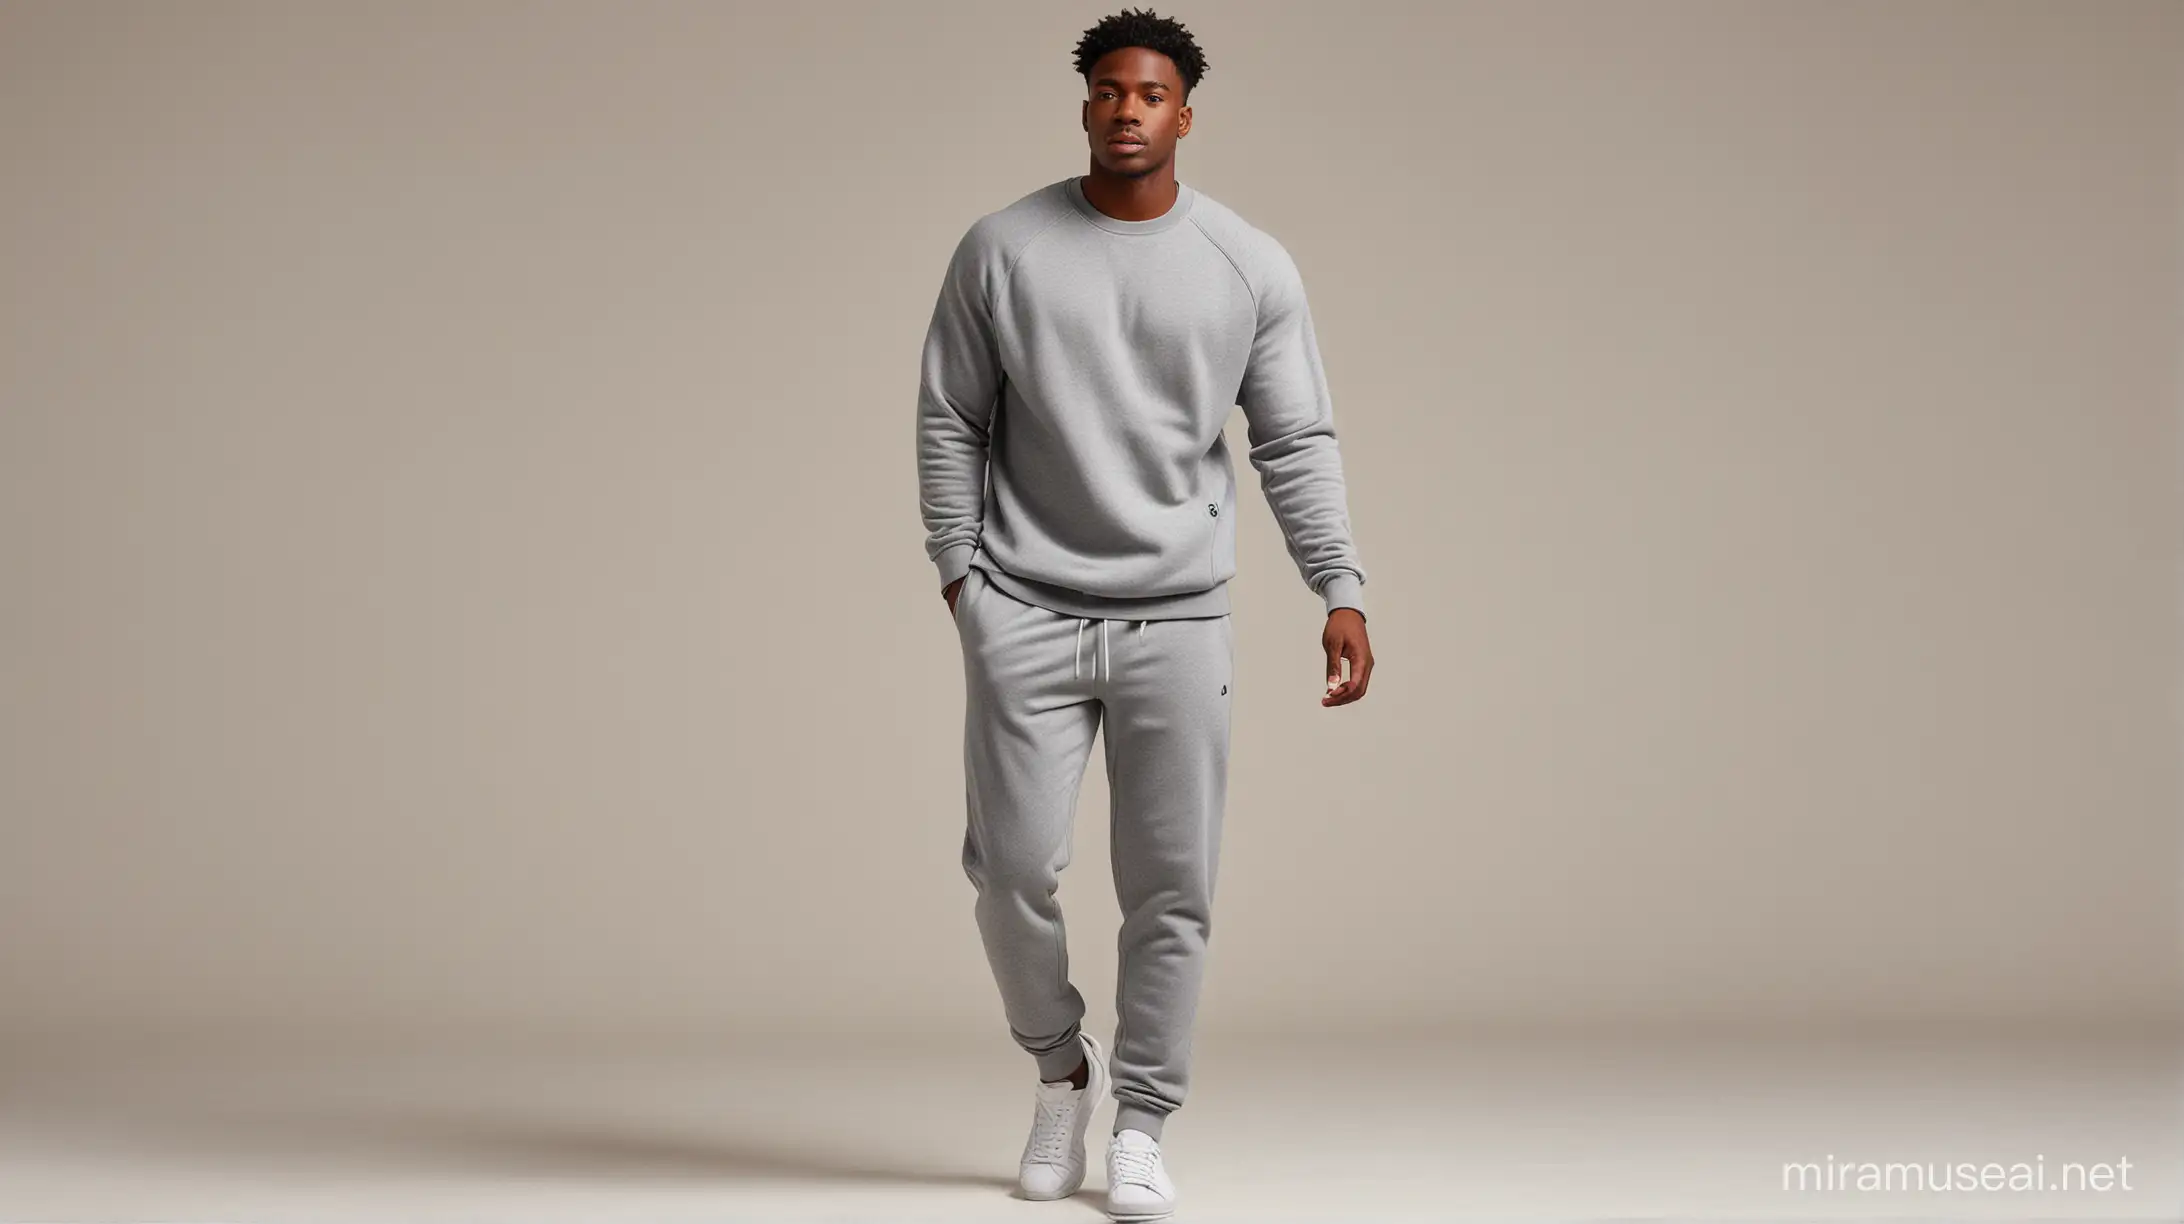 Stylish Black Man in Casual Grey Crewneck and Jogging Pants